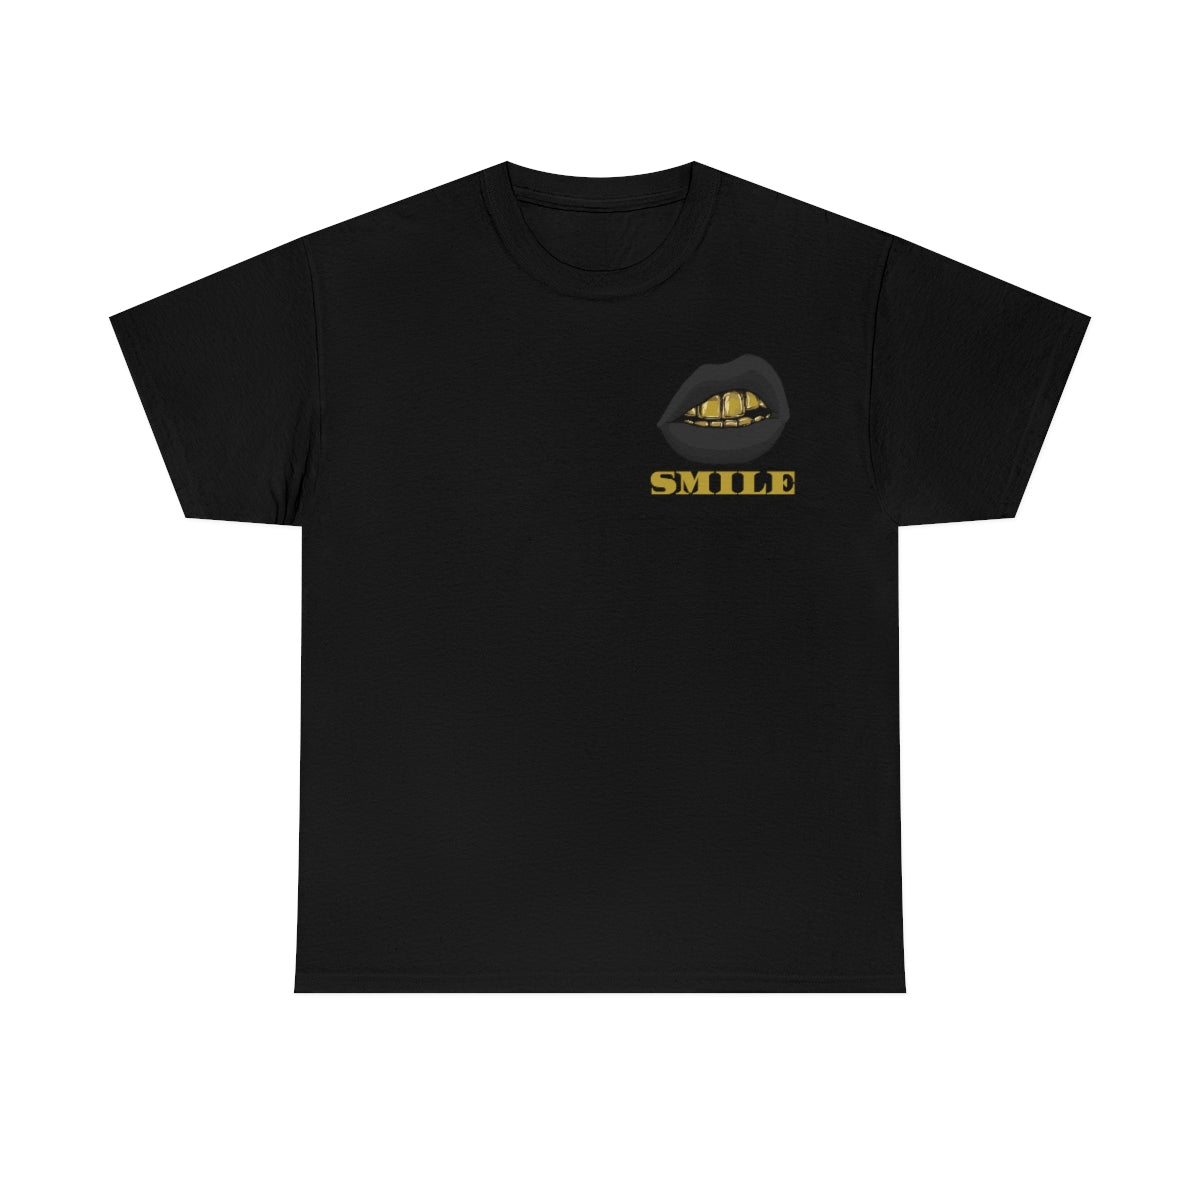 “SMILE” T-Shirt